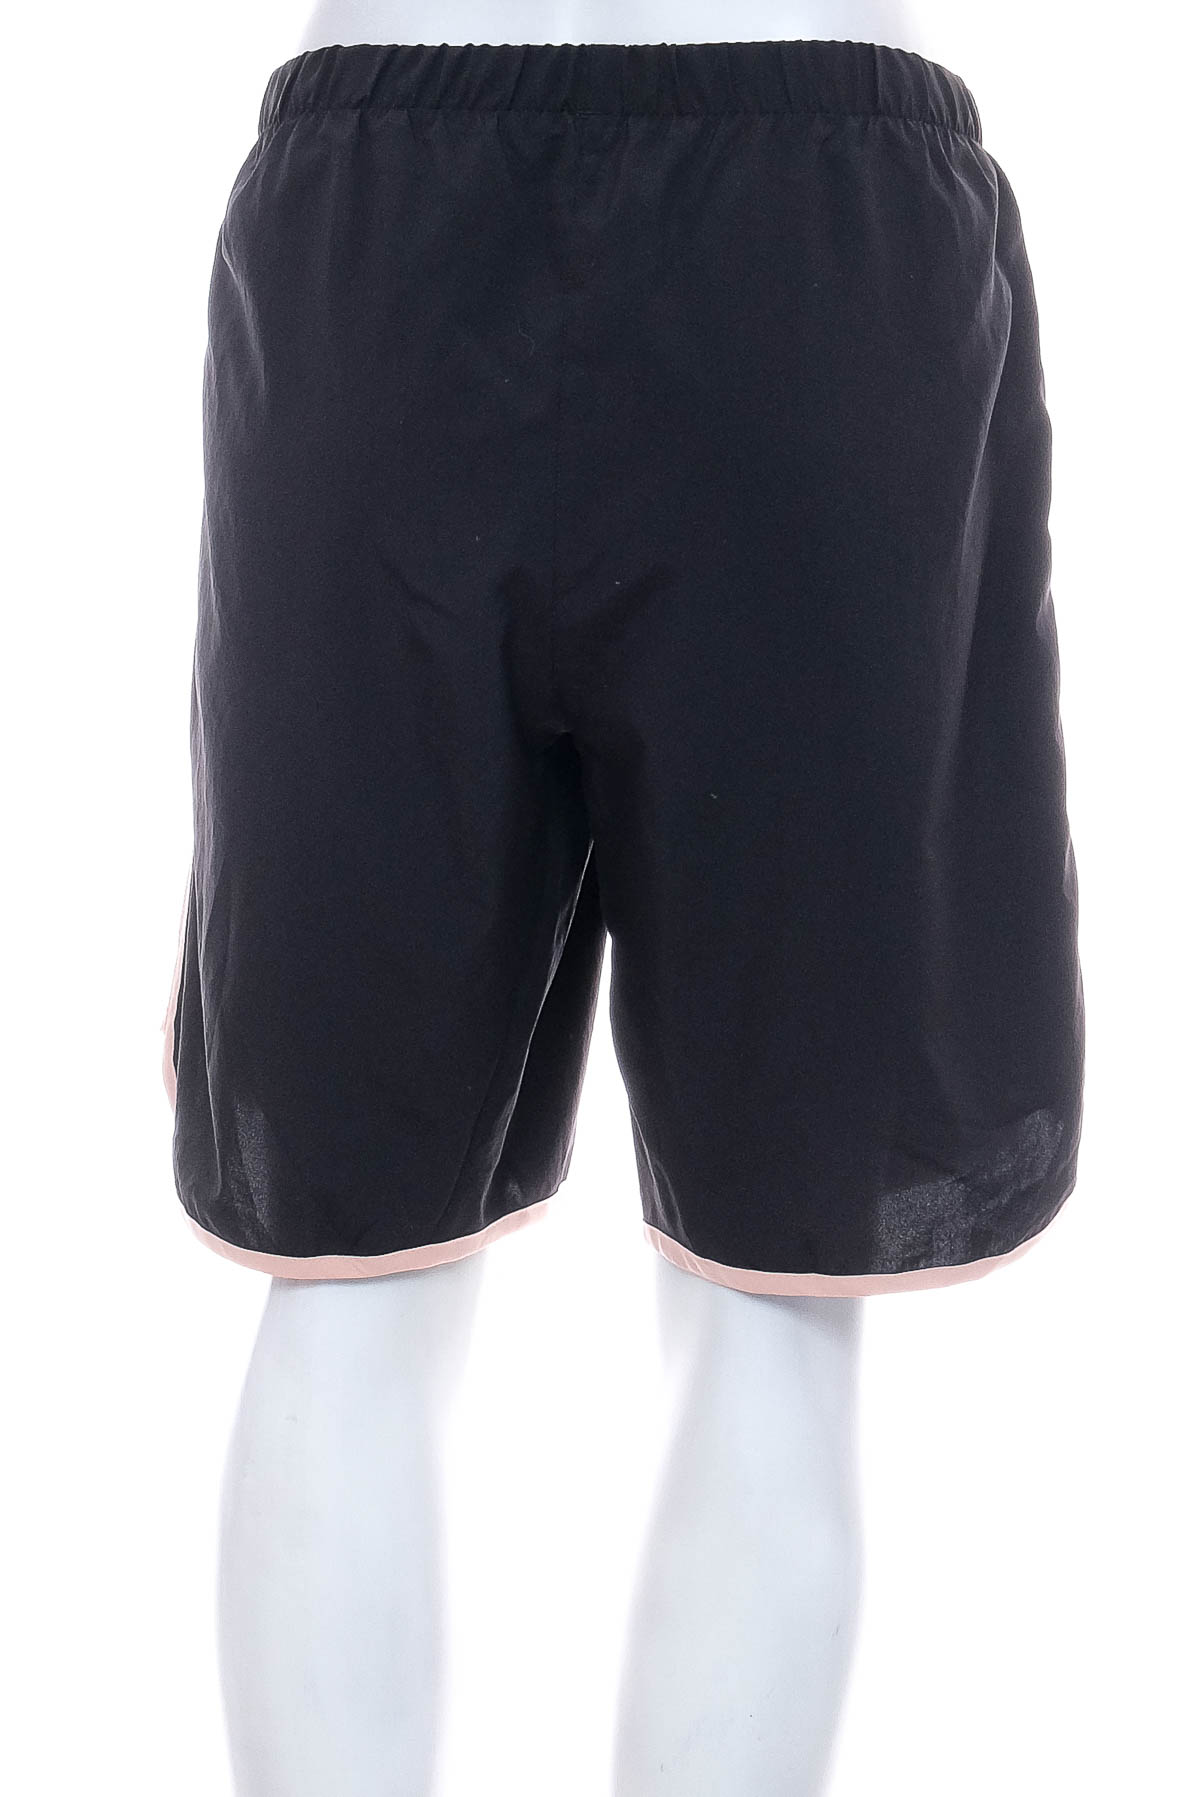 Women's shorts - Adidas - 1